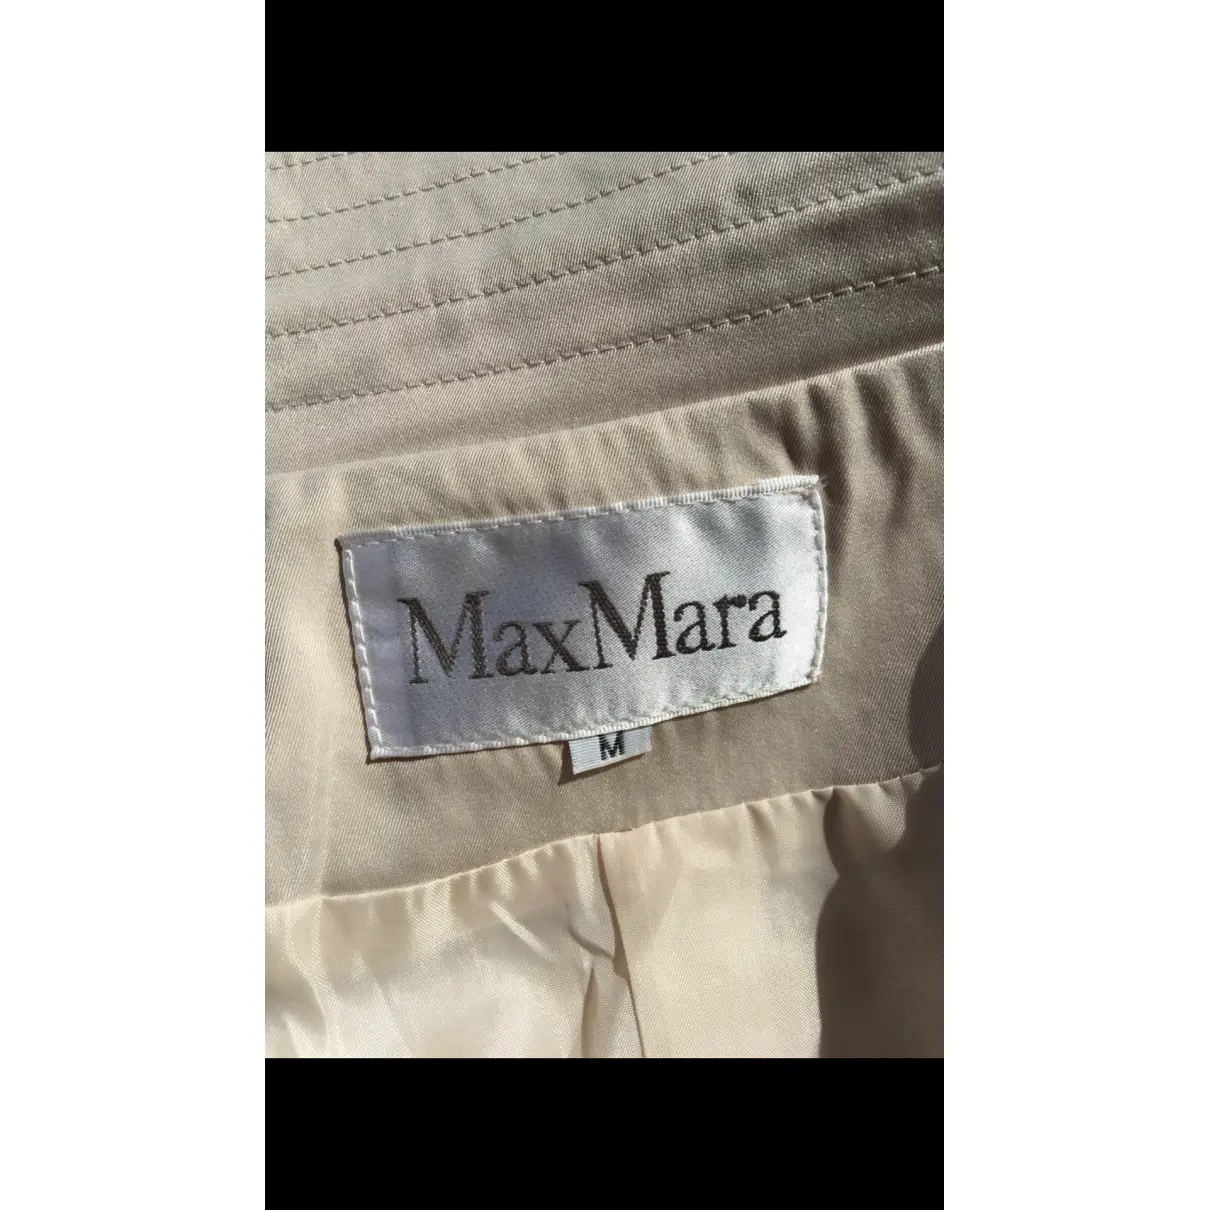 Buy Max Mara Max Mara Atelier trench coat online